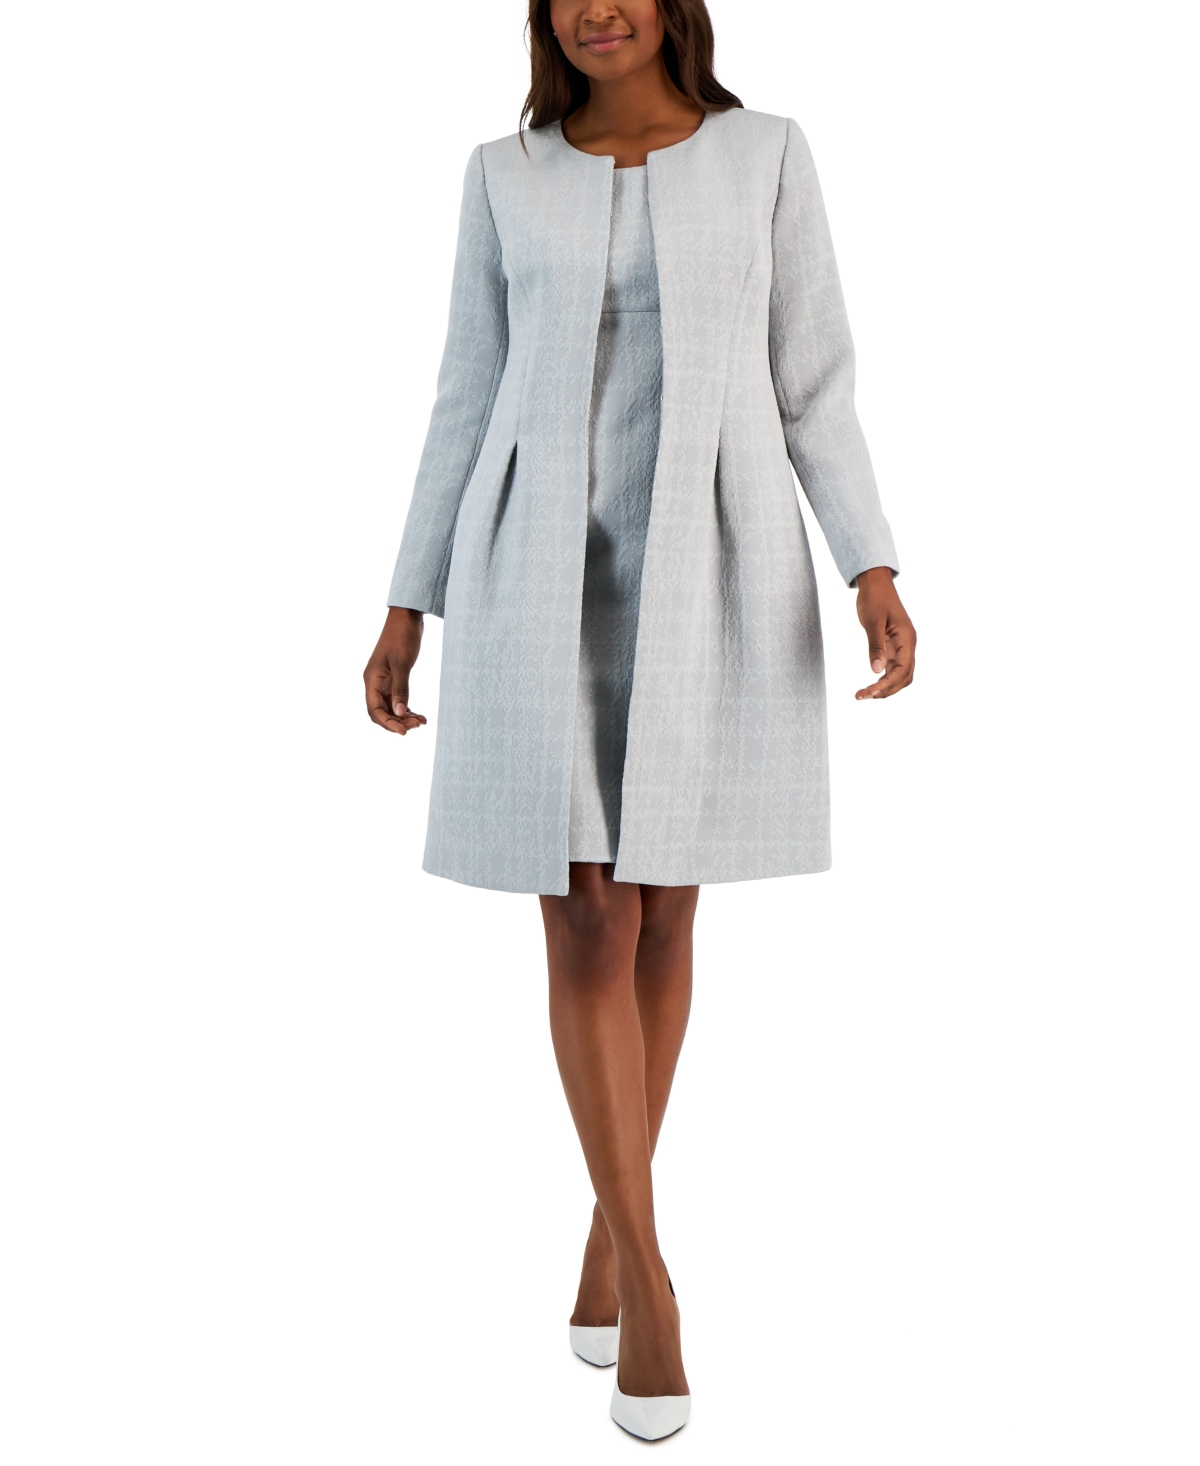 Women's Jacquard Long Jacket & Sheath Dress, Regular and Petite Sizes - Light Blossom